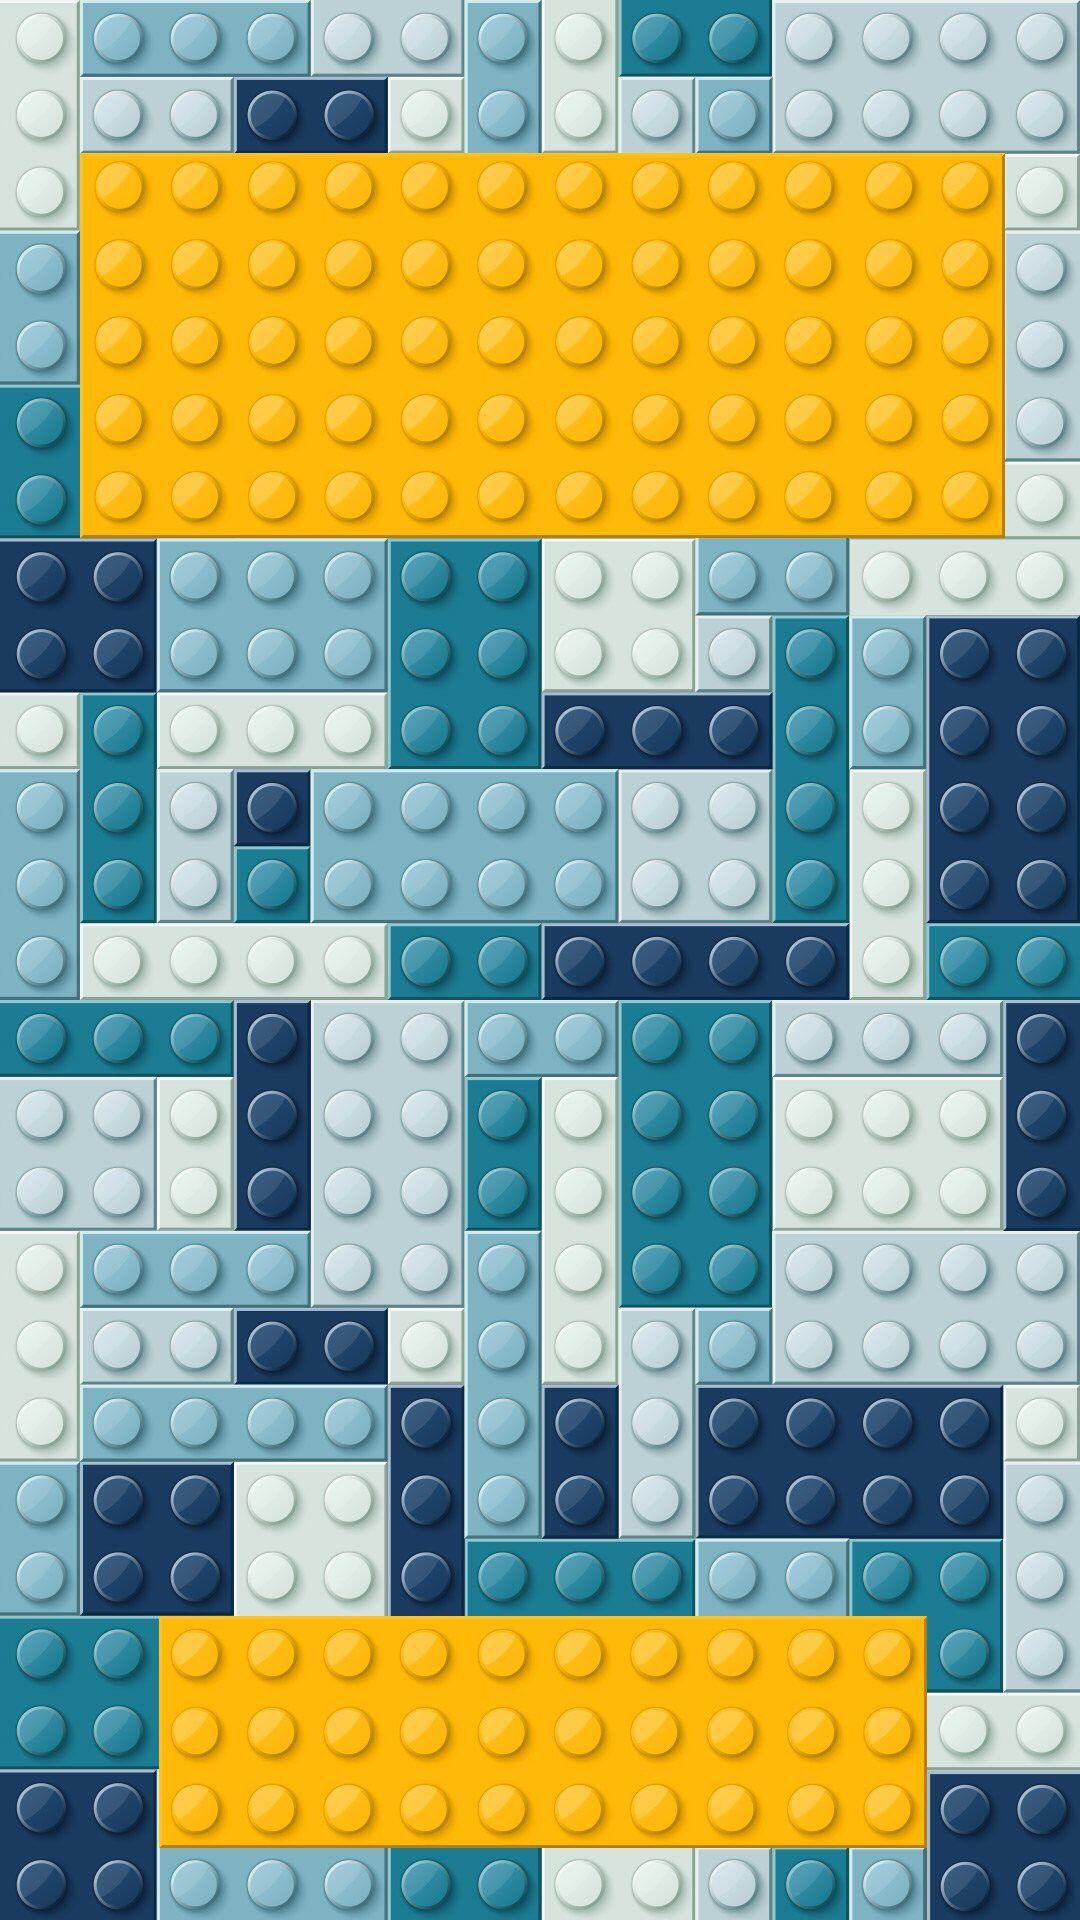 iPhone Apple Lego wallpaper Resolution 1080x1920 - CuteWallpaperHD.com